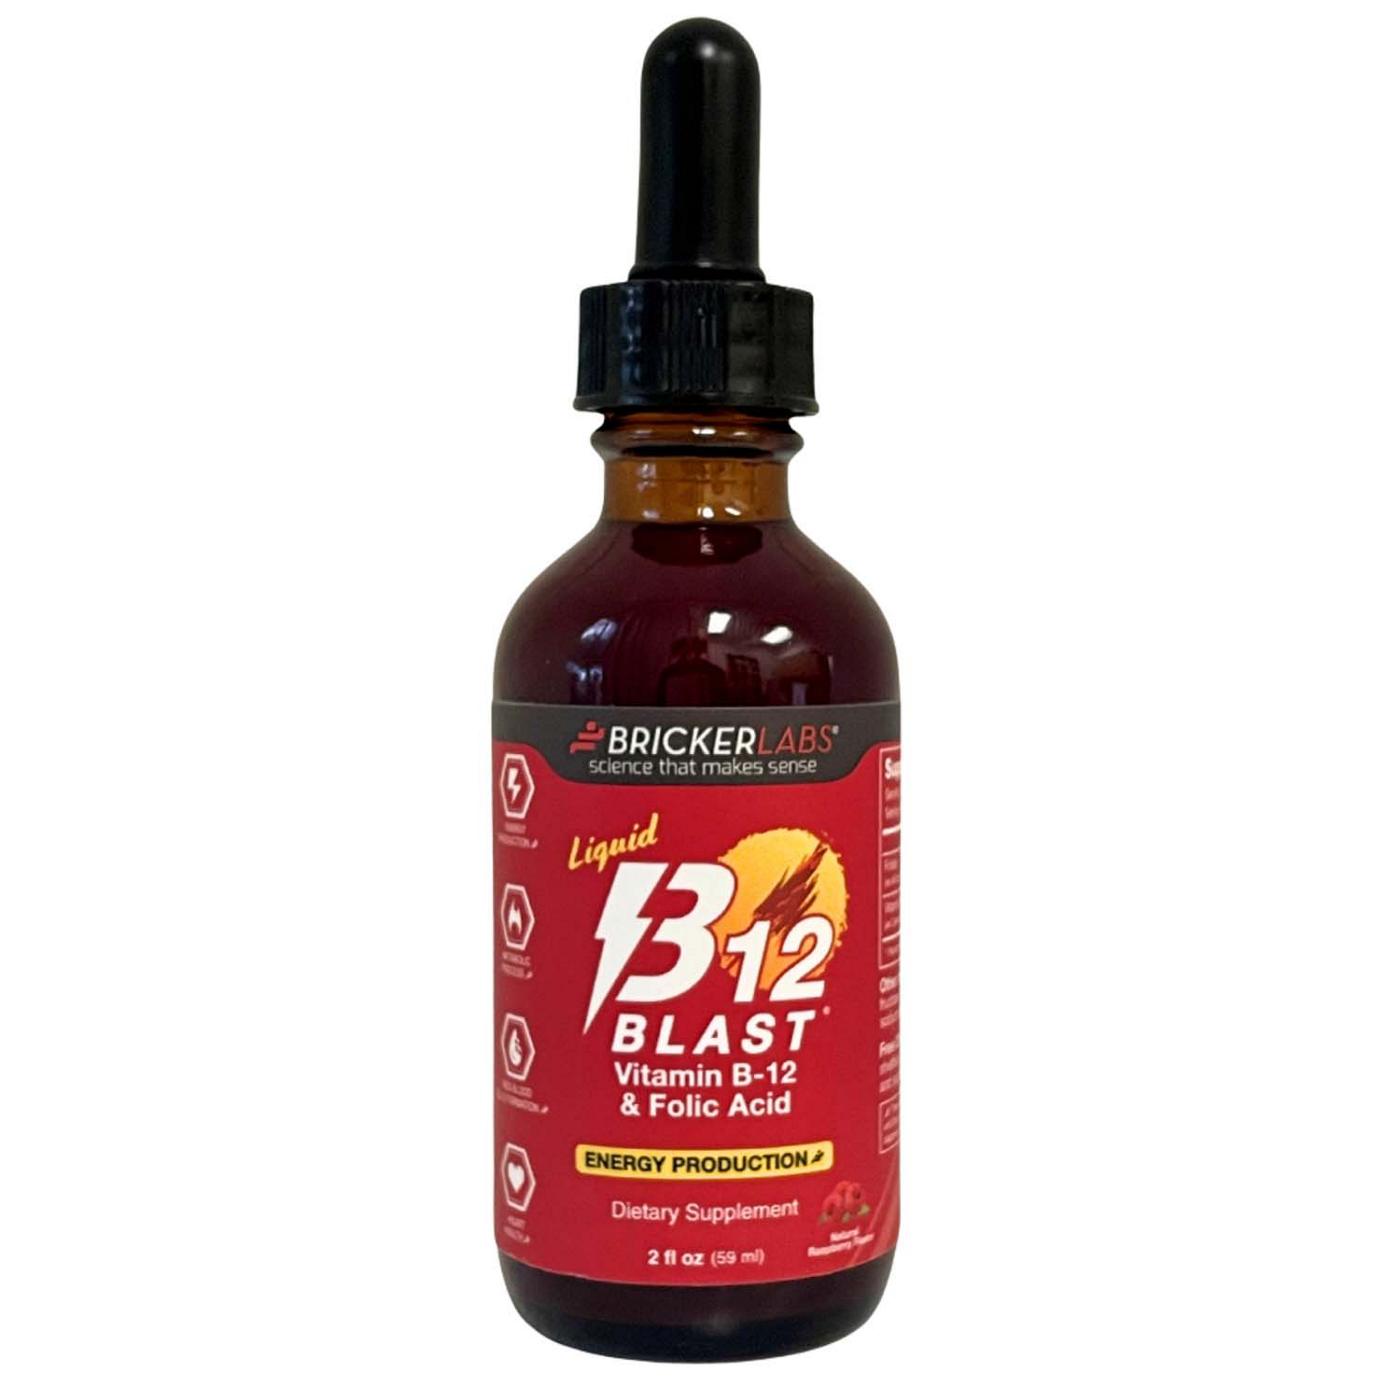 Bricker Labs B-12 Blast Vitamin B12 & Folic Acid Supplement - Raspberry; image 1 of 3